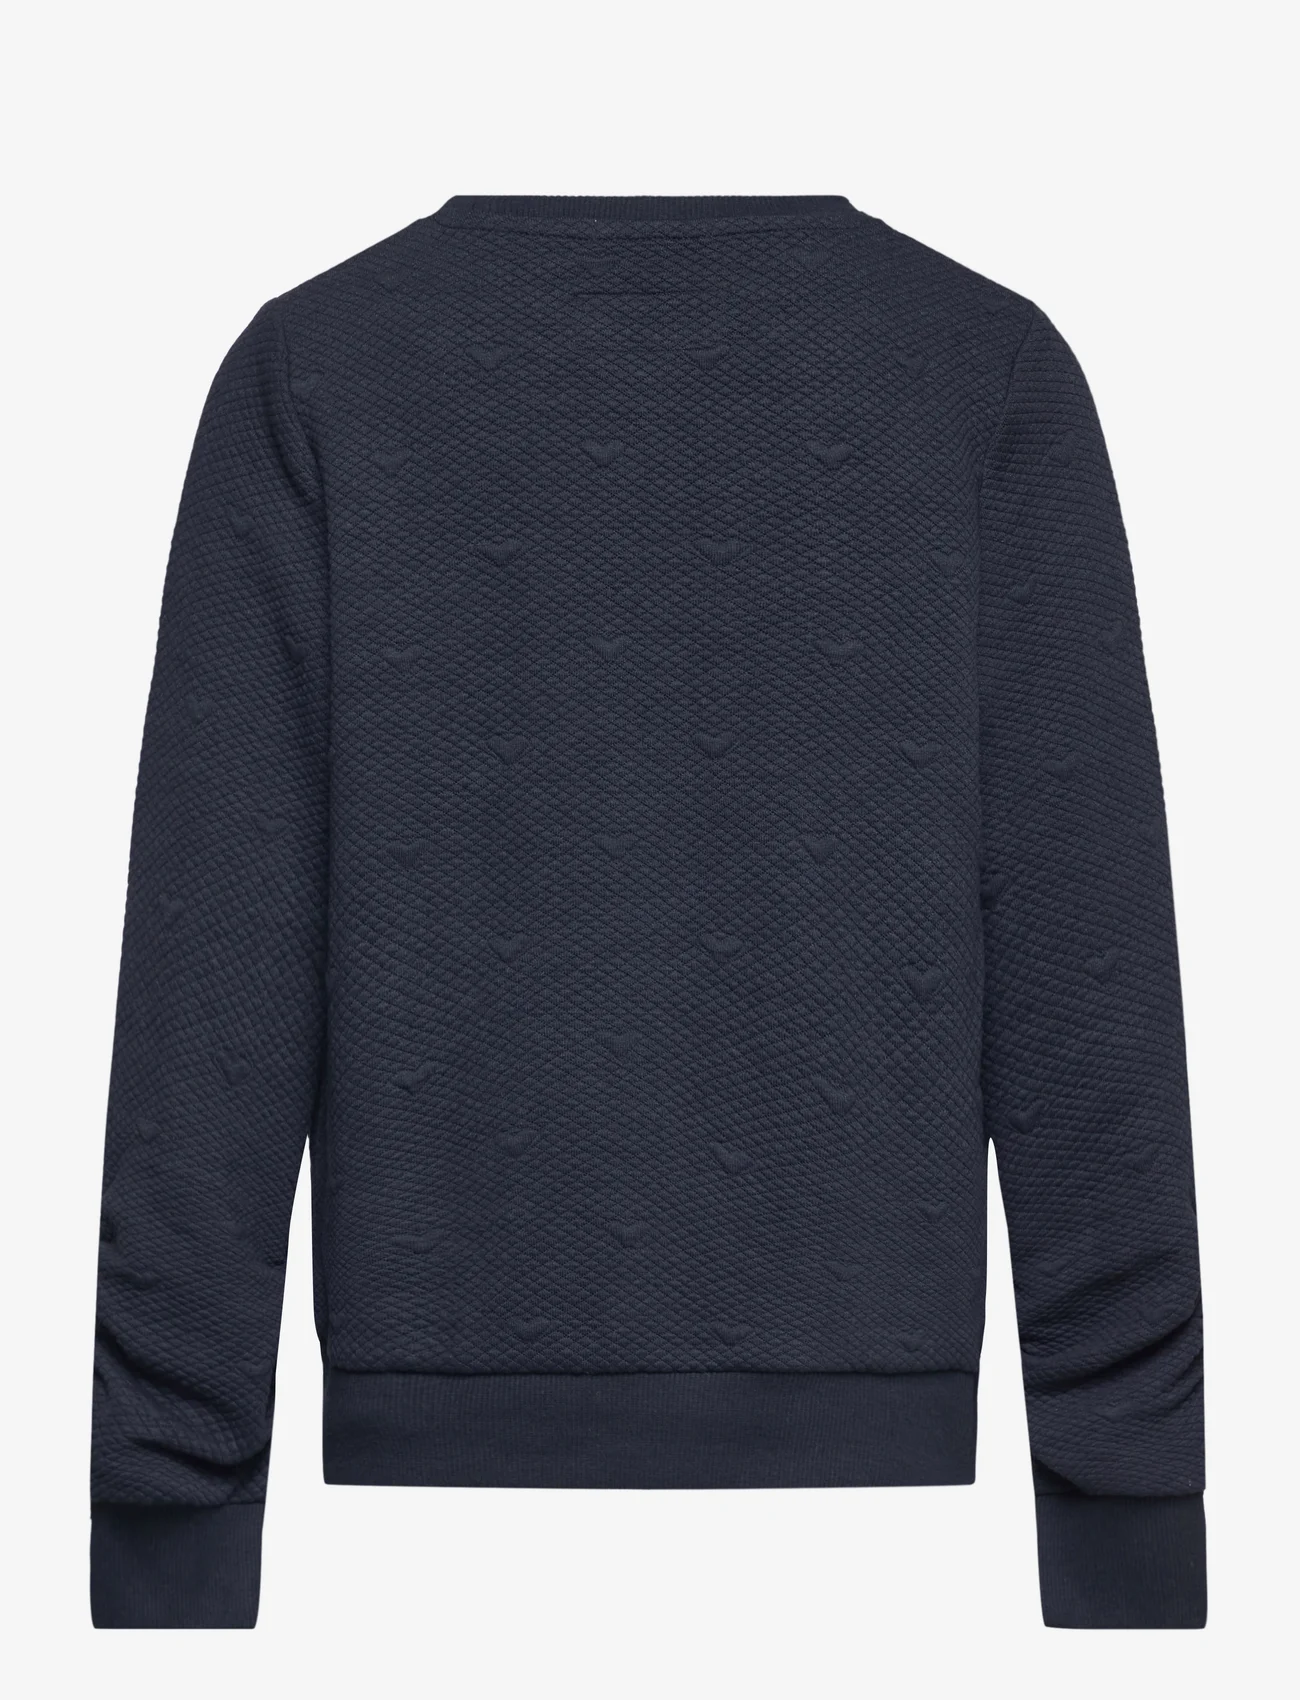 Tom Tailor - structured jaquard sweater - sportiska stila džemperi - sky captain blue - 1